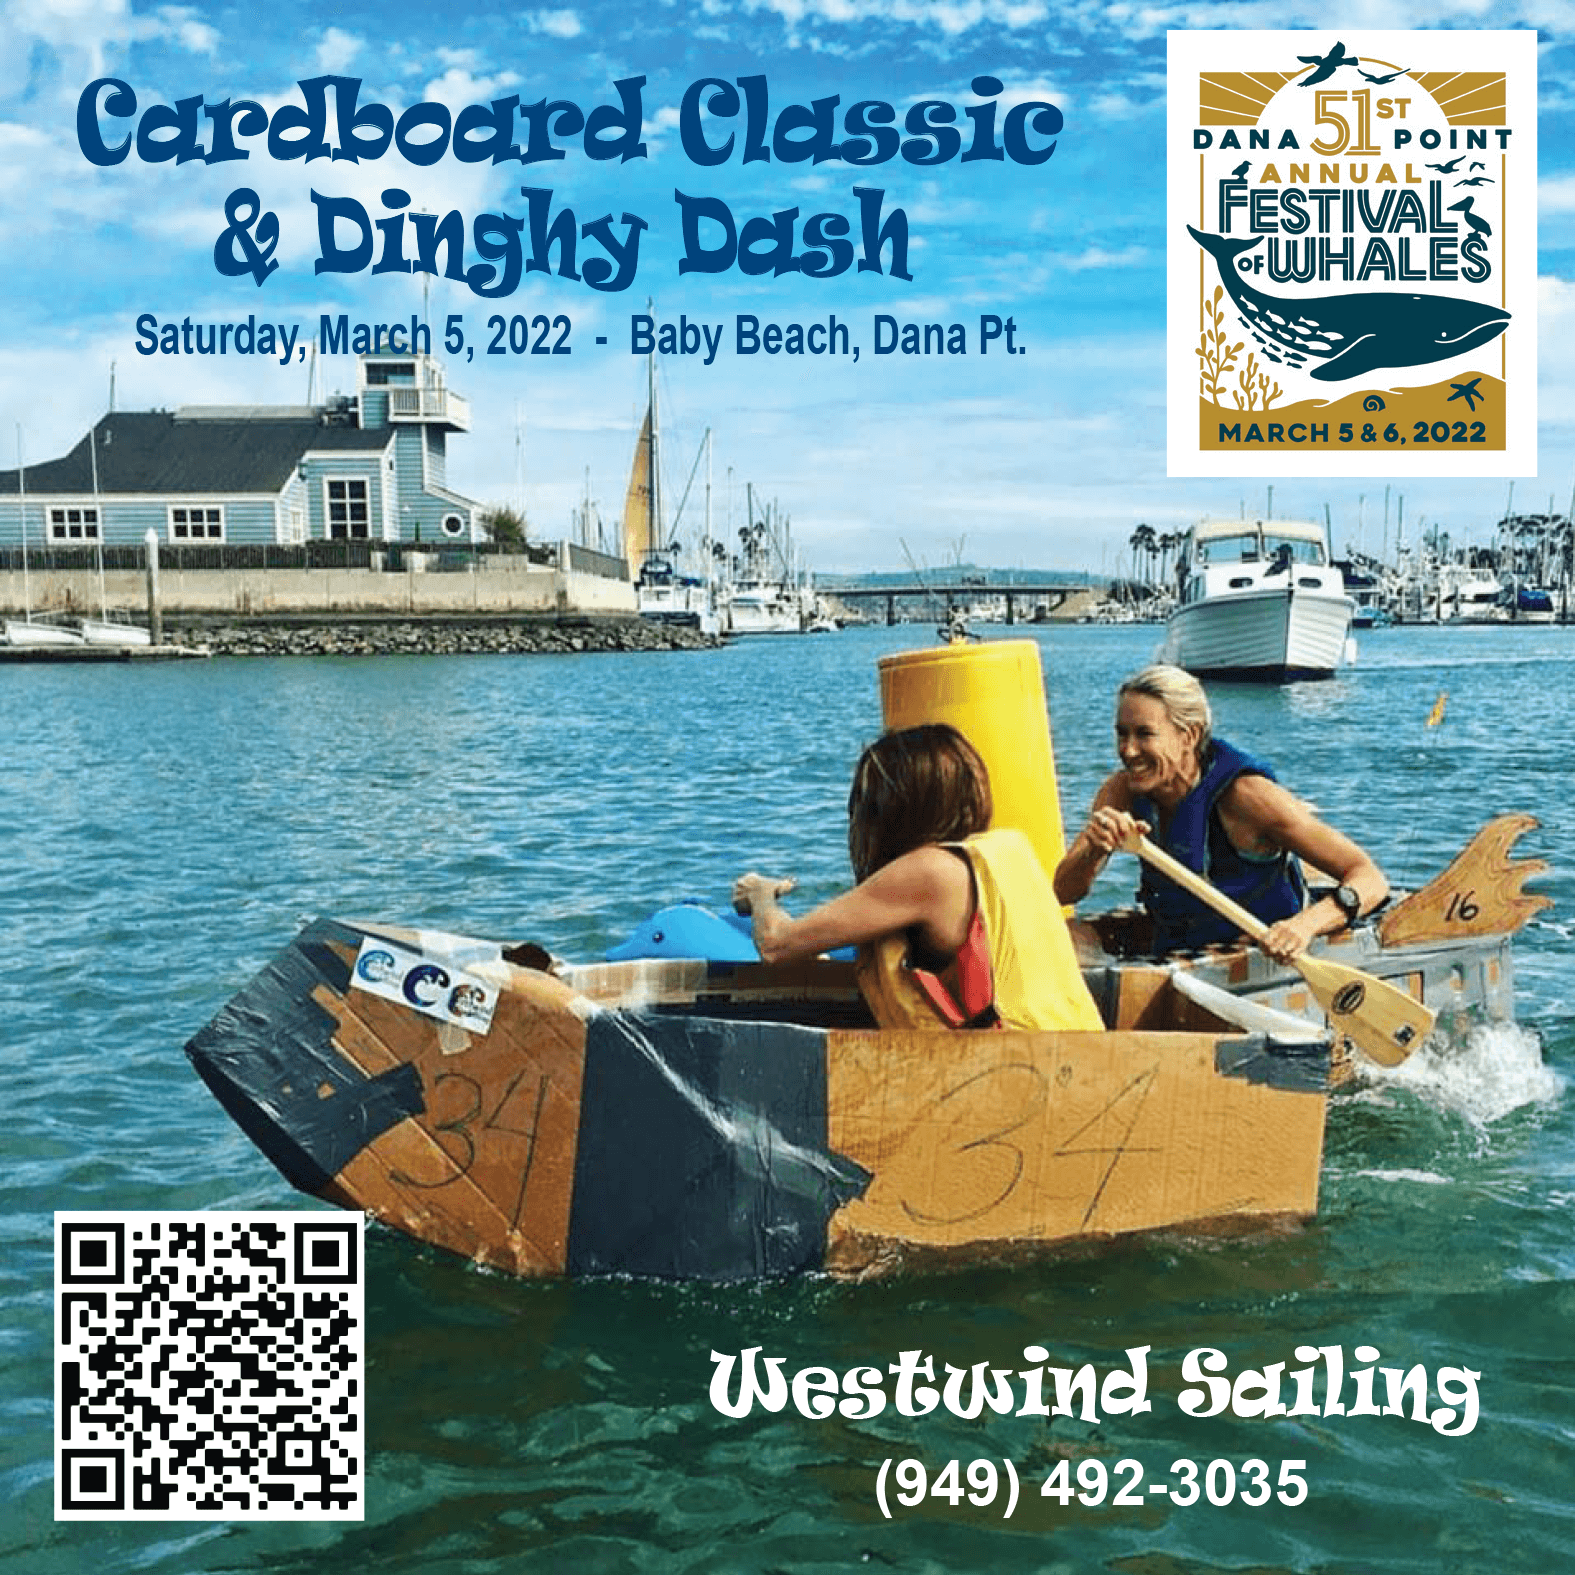 The Cardboard Classic & Dinghy Dash